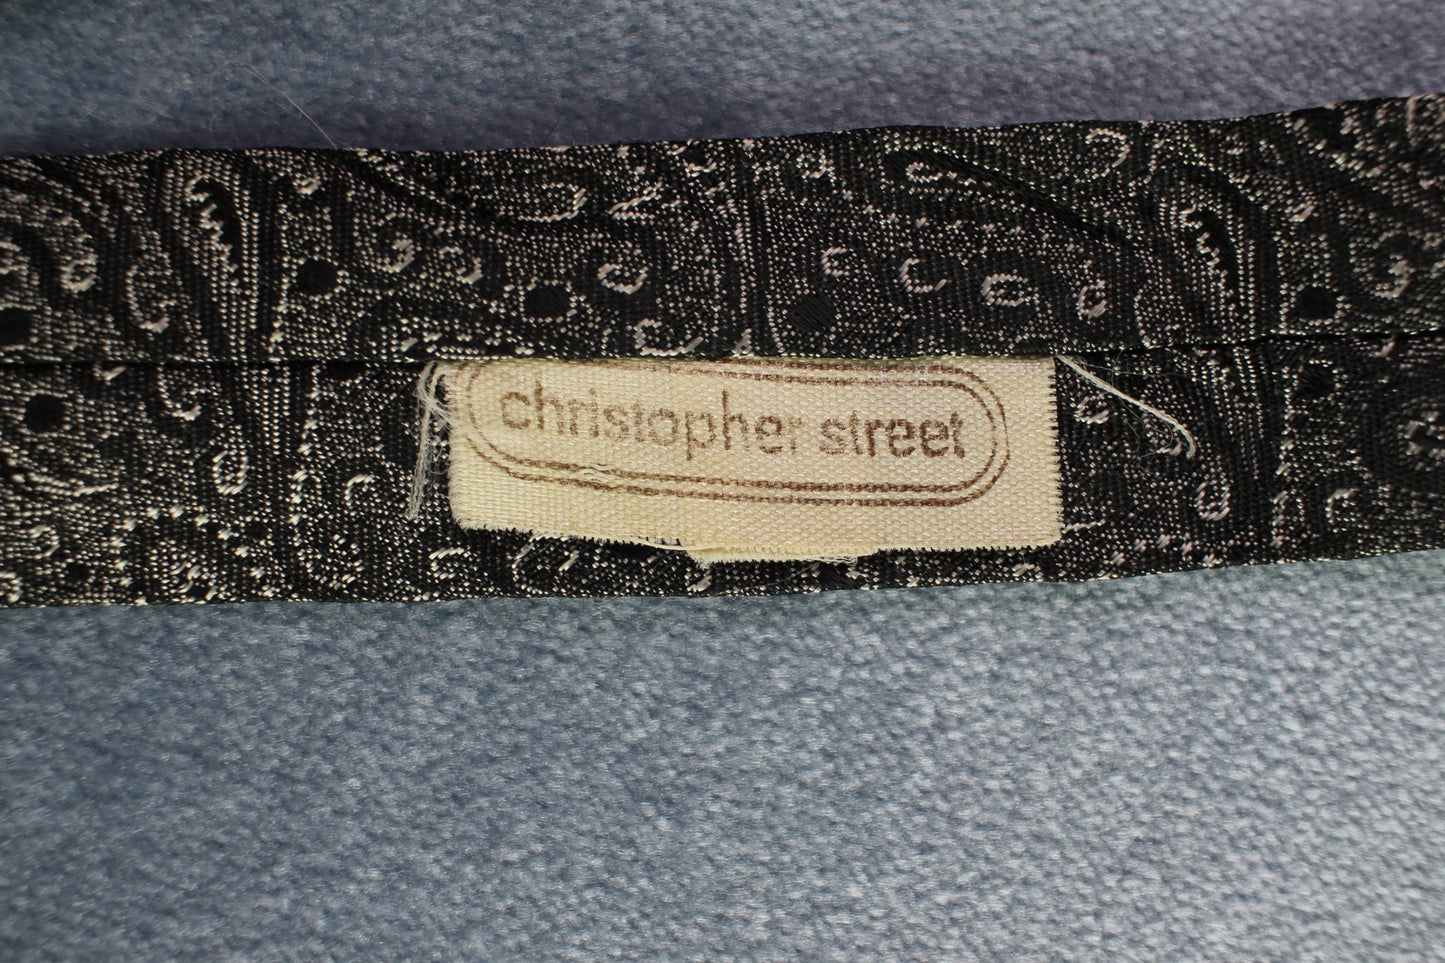 Vintage Christopher Street black silver paisley pattern skinny tie